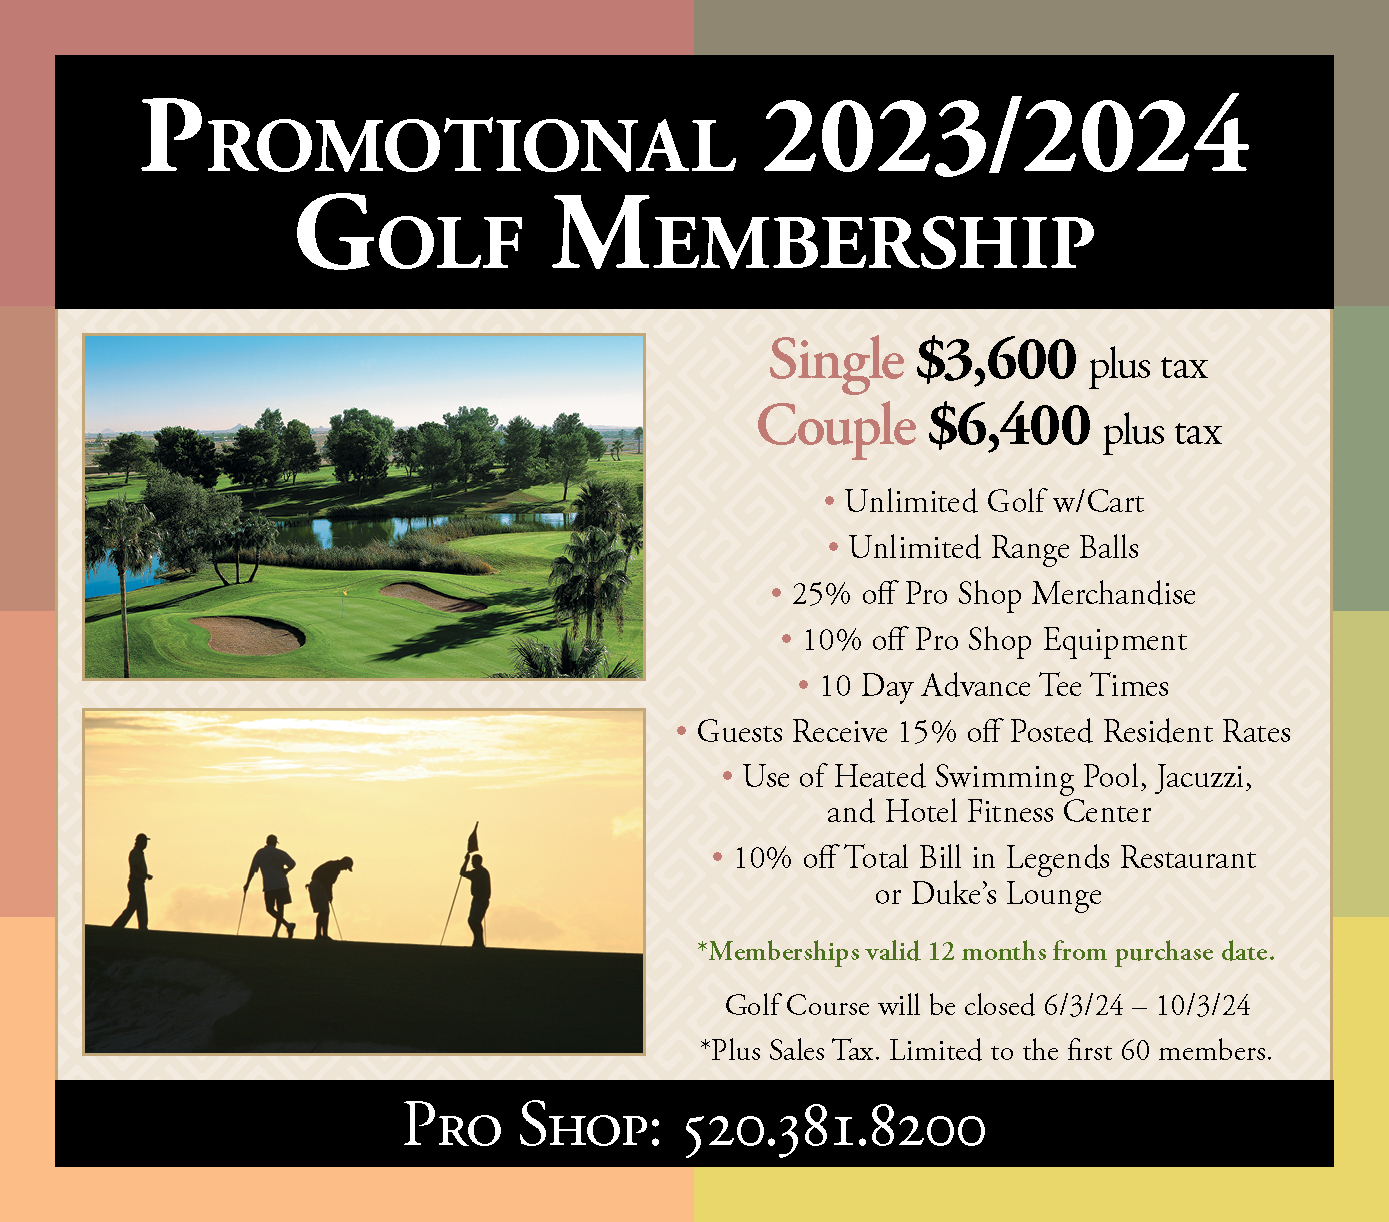 Francisco Grande Hotel 2023/2024 Golf Membership